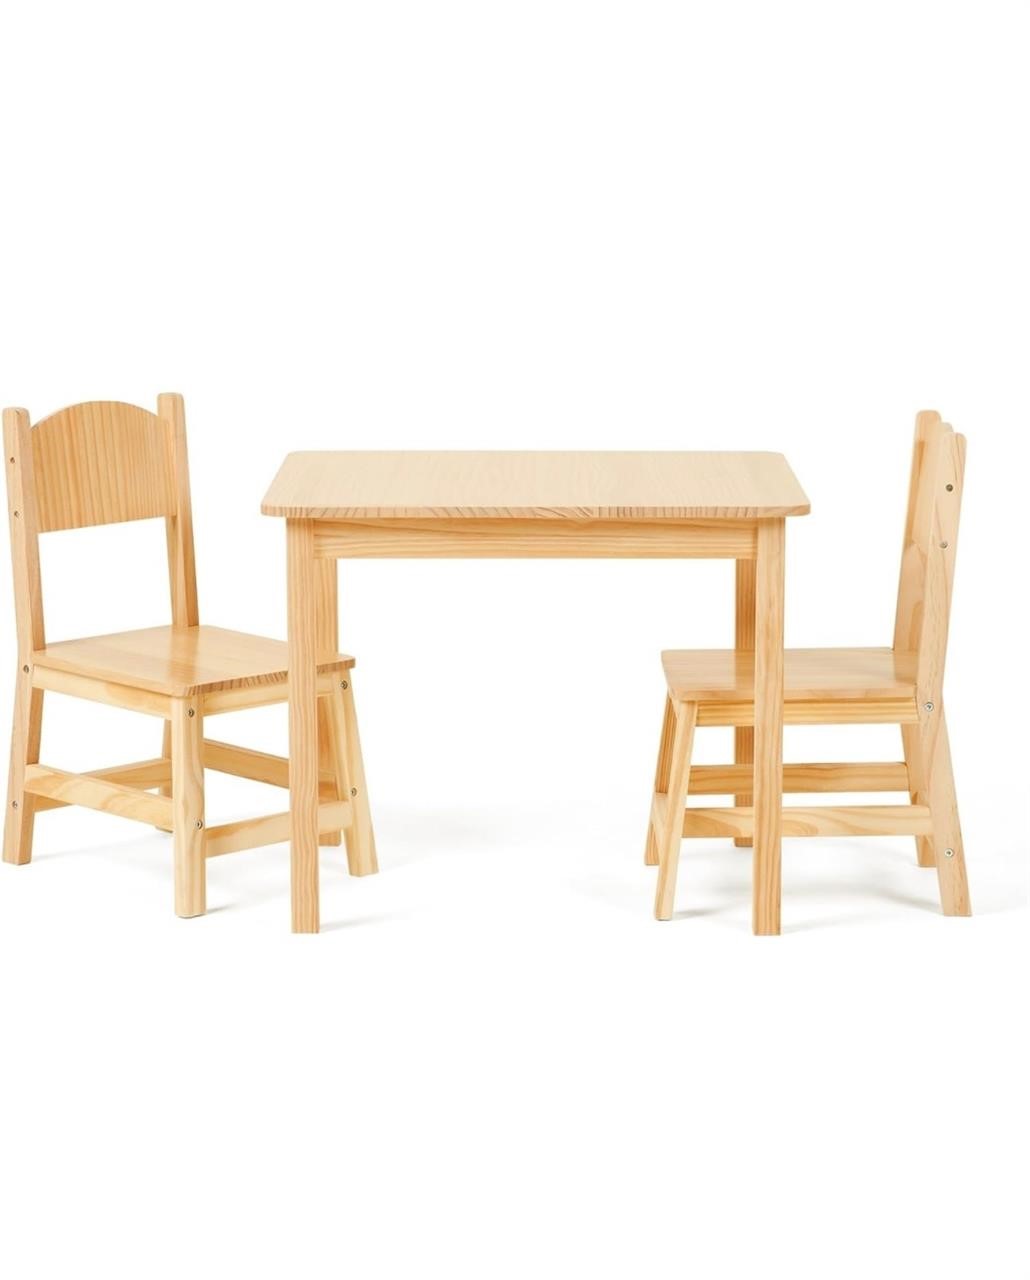 $130 Wood Kids Table Chair Set